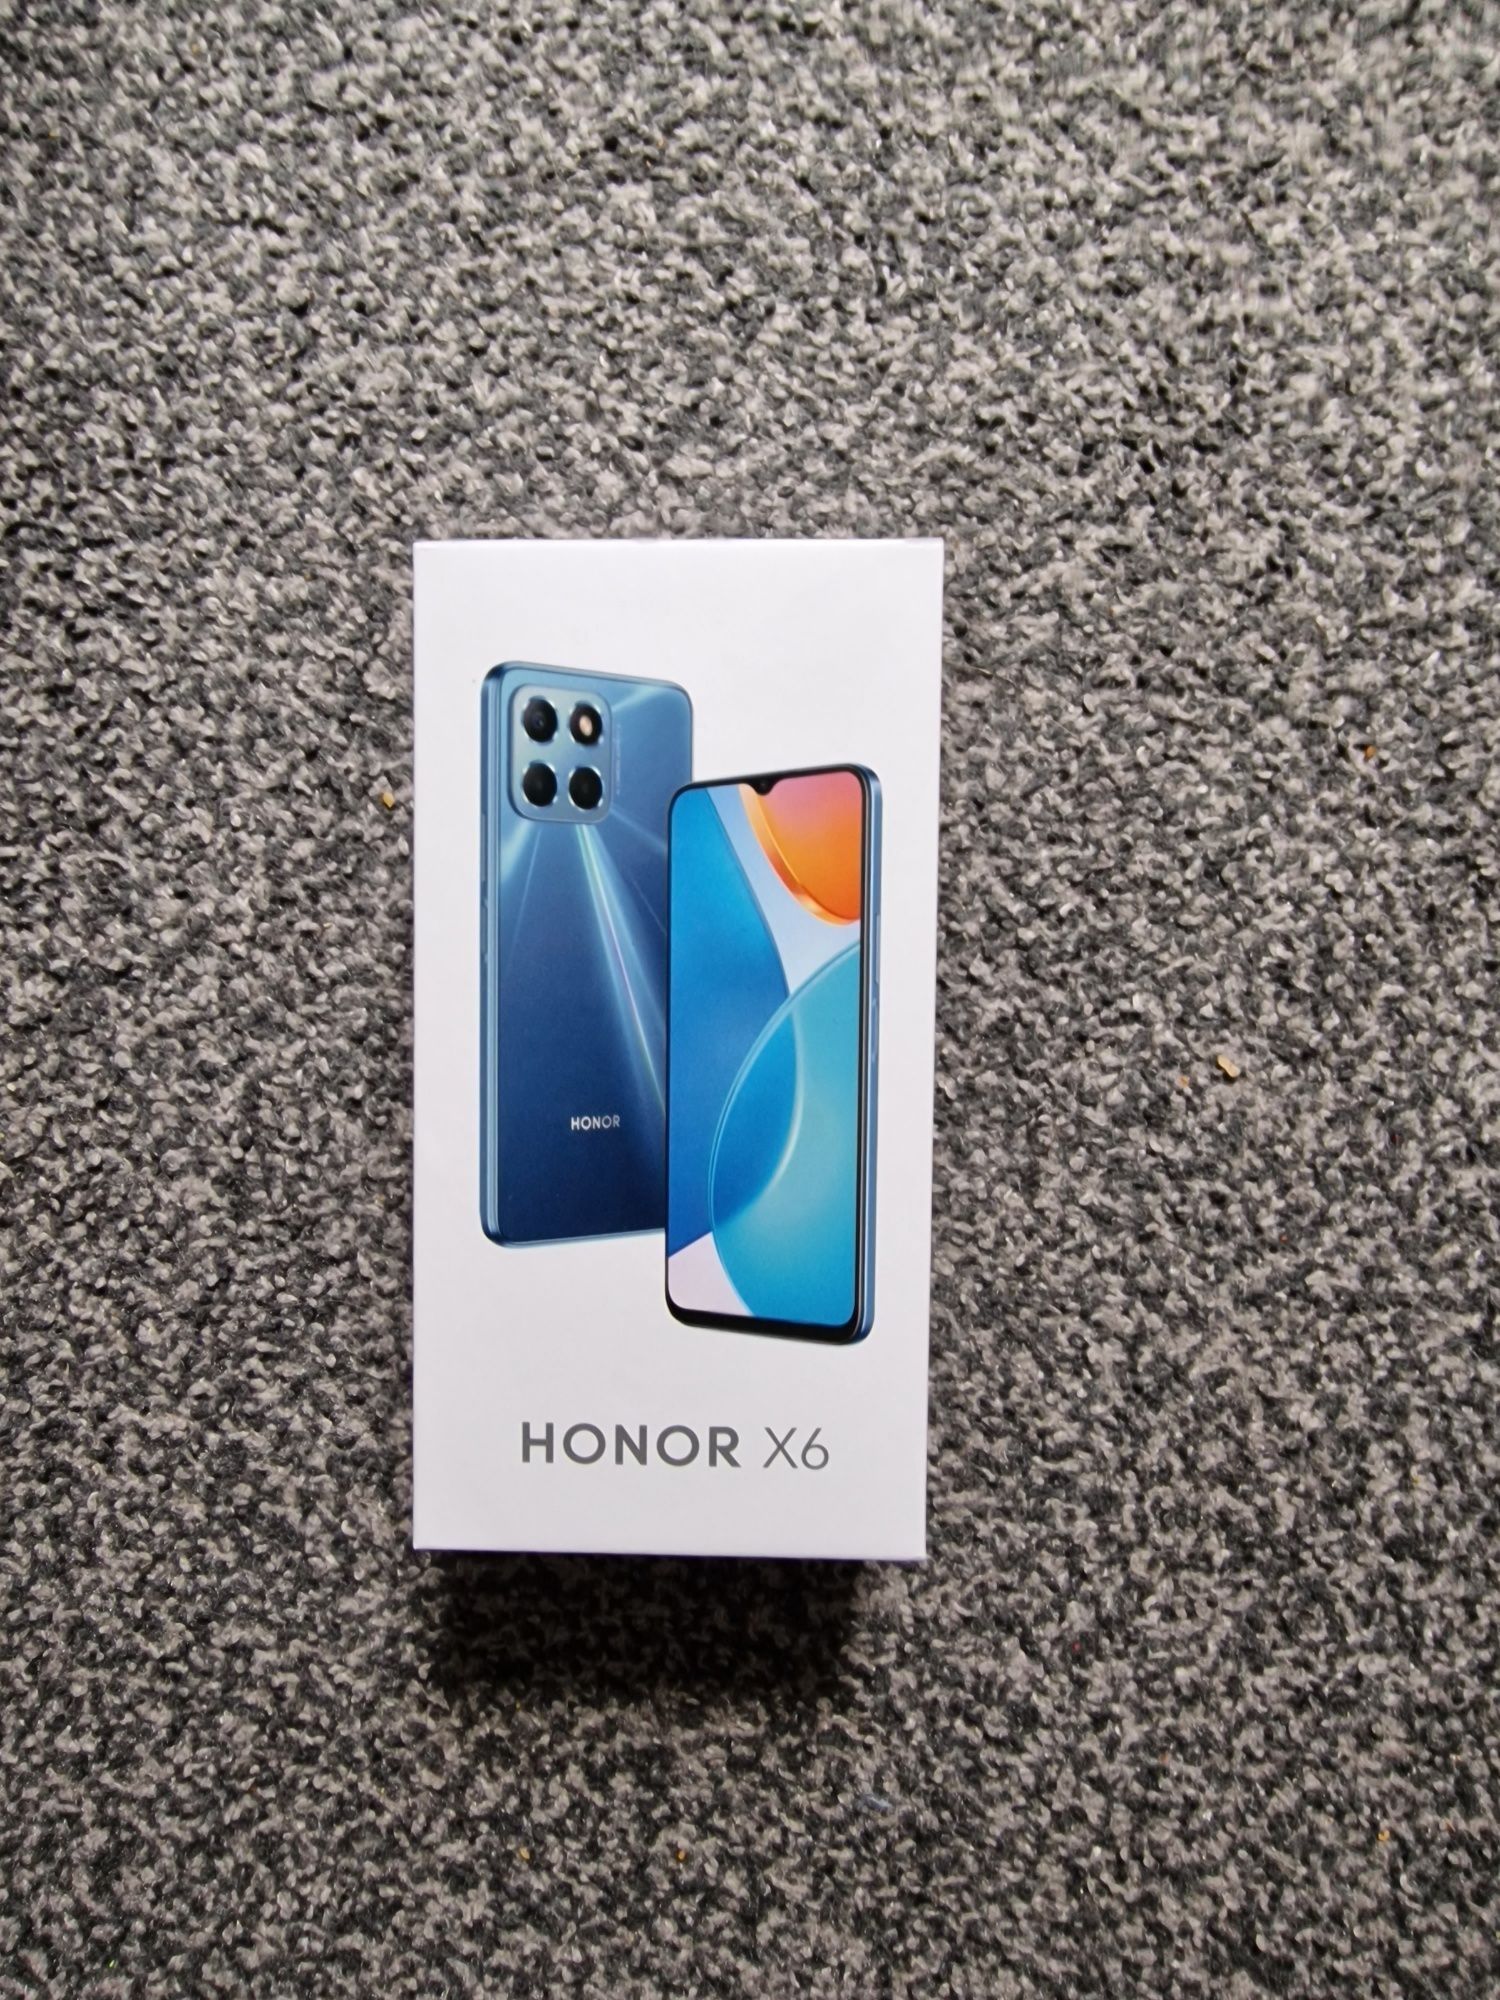 Vand Honor x6 nou, sigilat,pachet complet și garantie